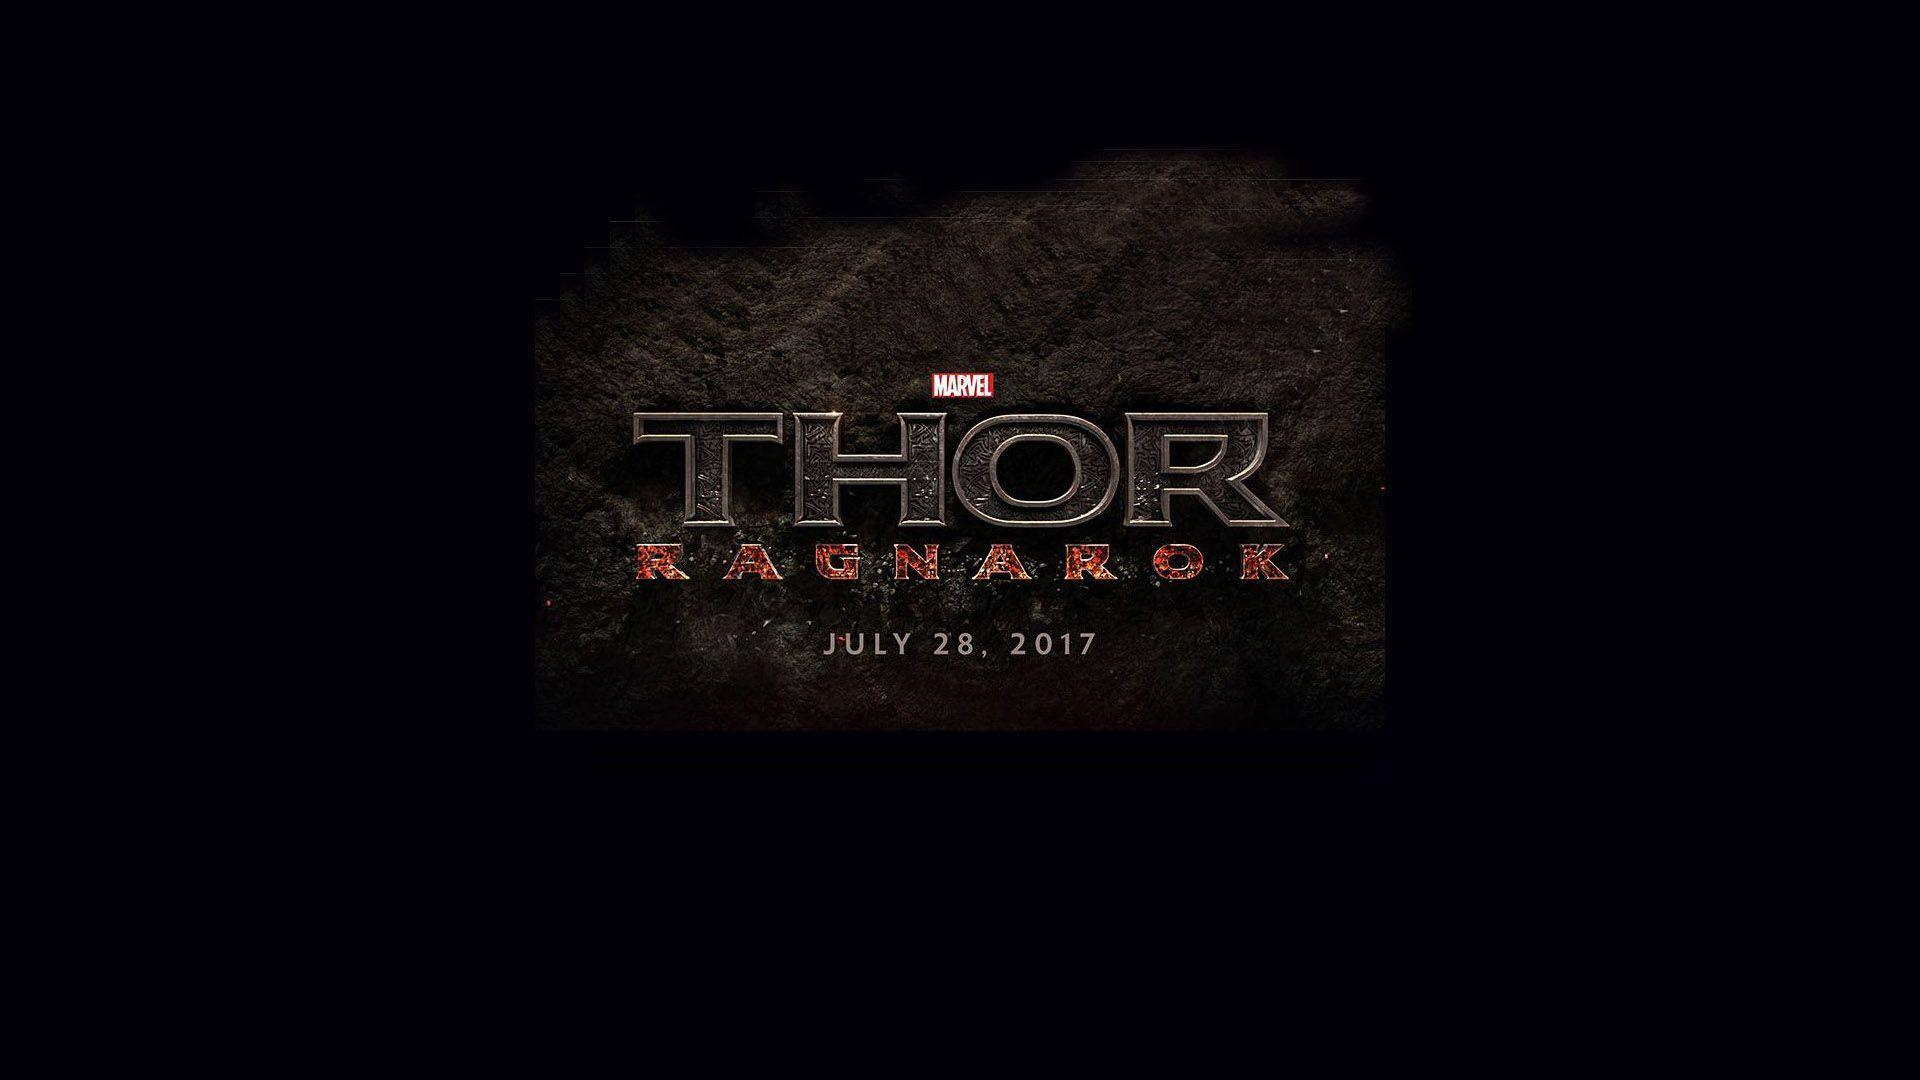 Thor: Ragnarok 2017 Movie Logo Wallpaper free desktop background